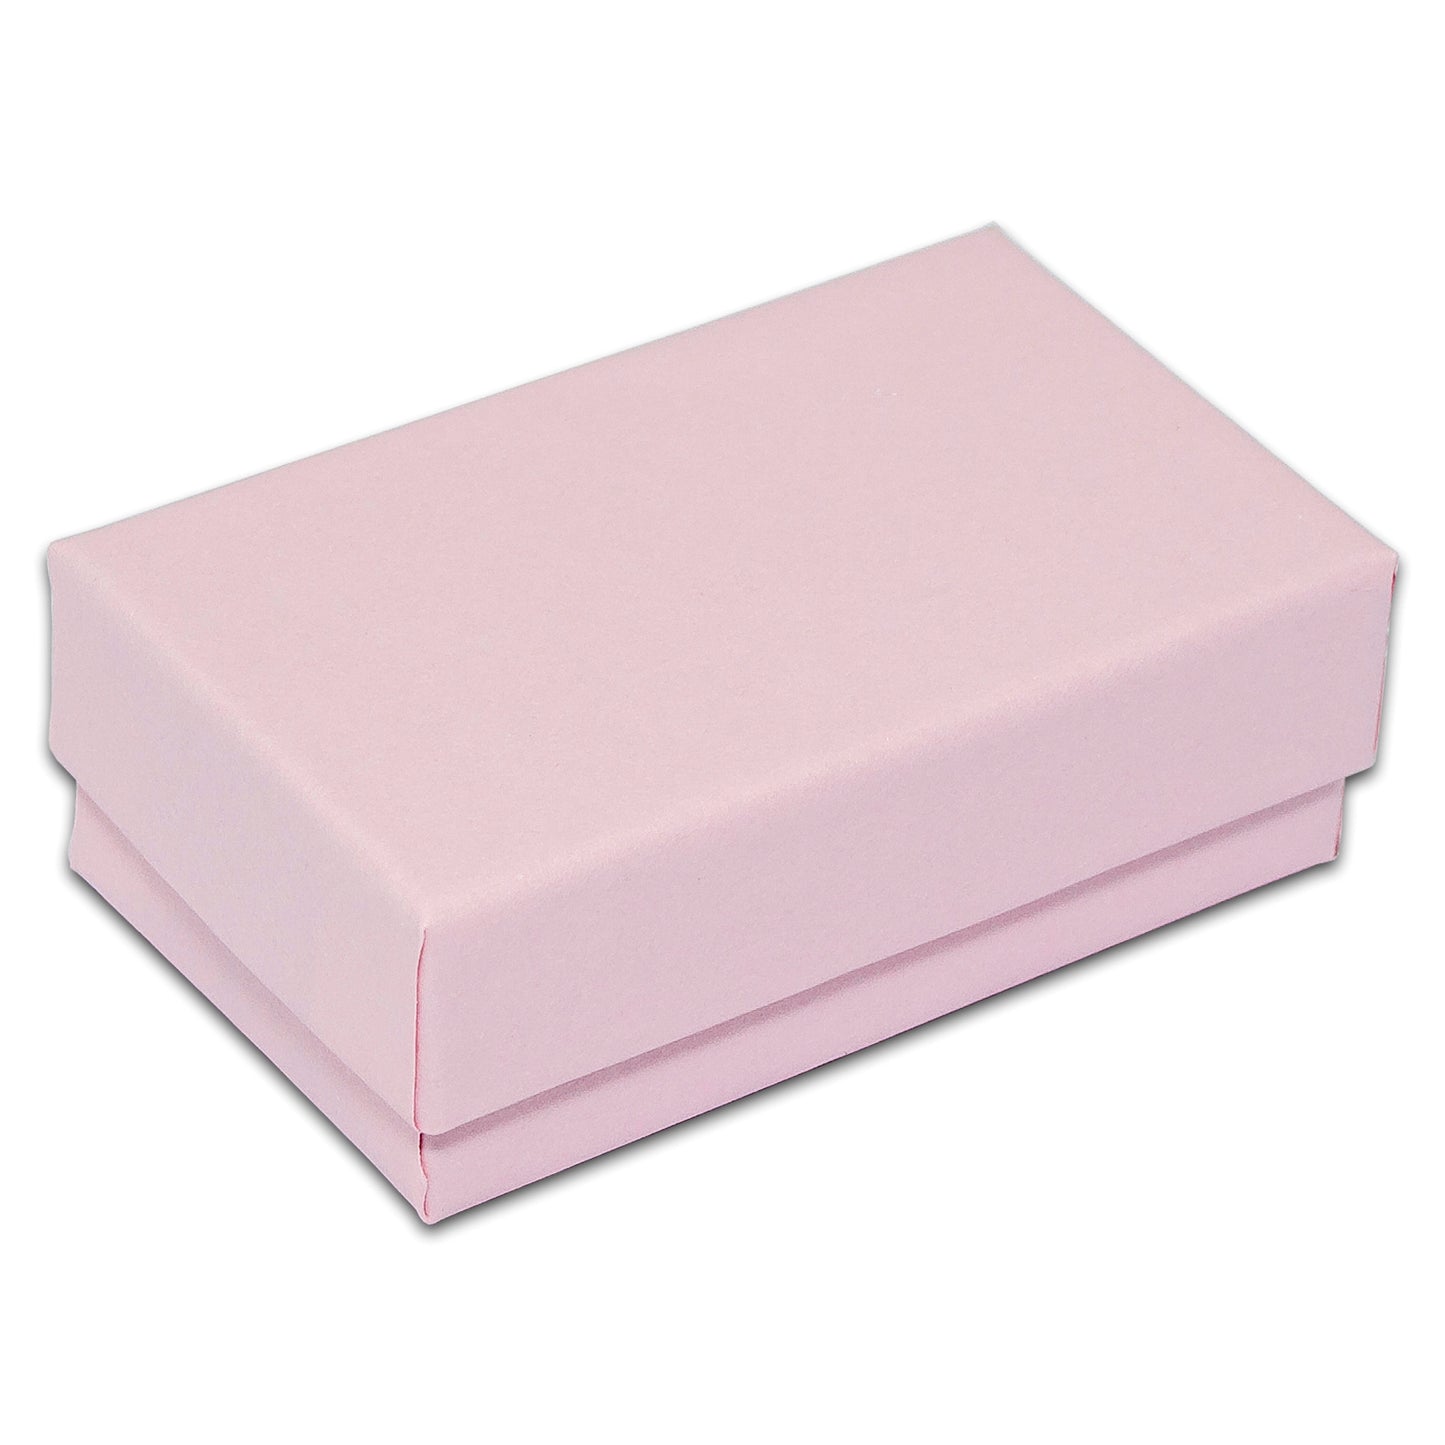 2 5/8" x 1 5/8" x 1" Pink Cotton Filled Paper Box